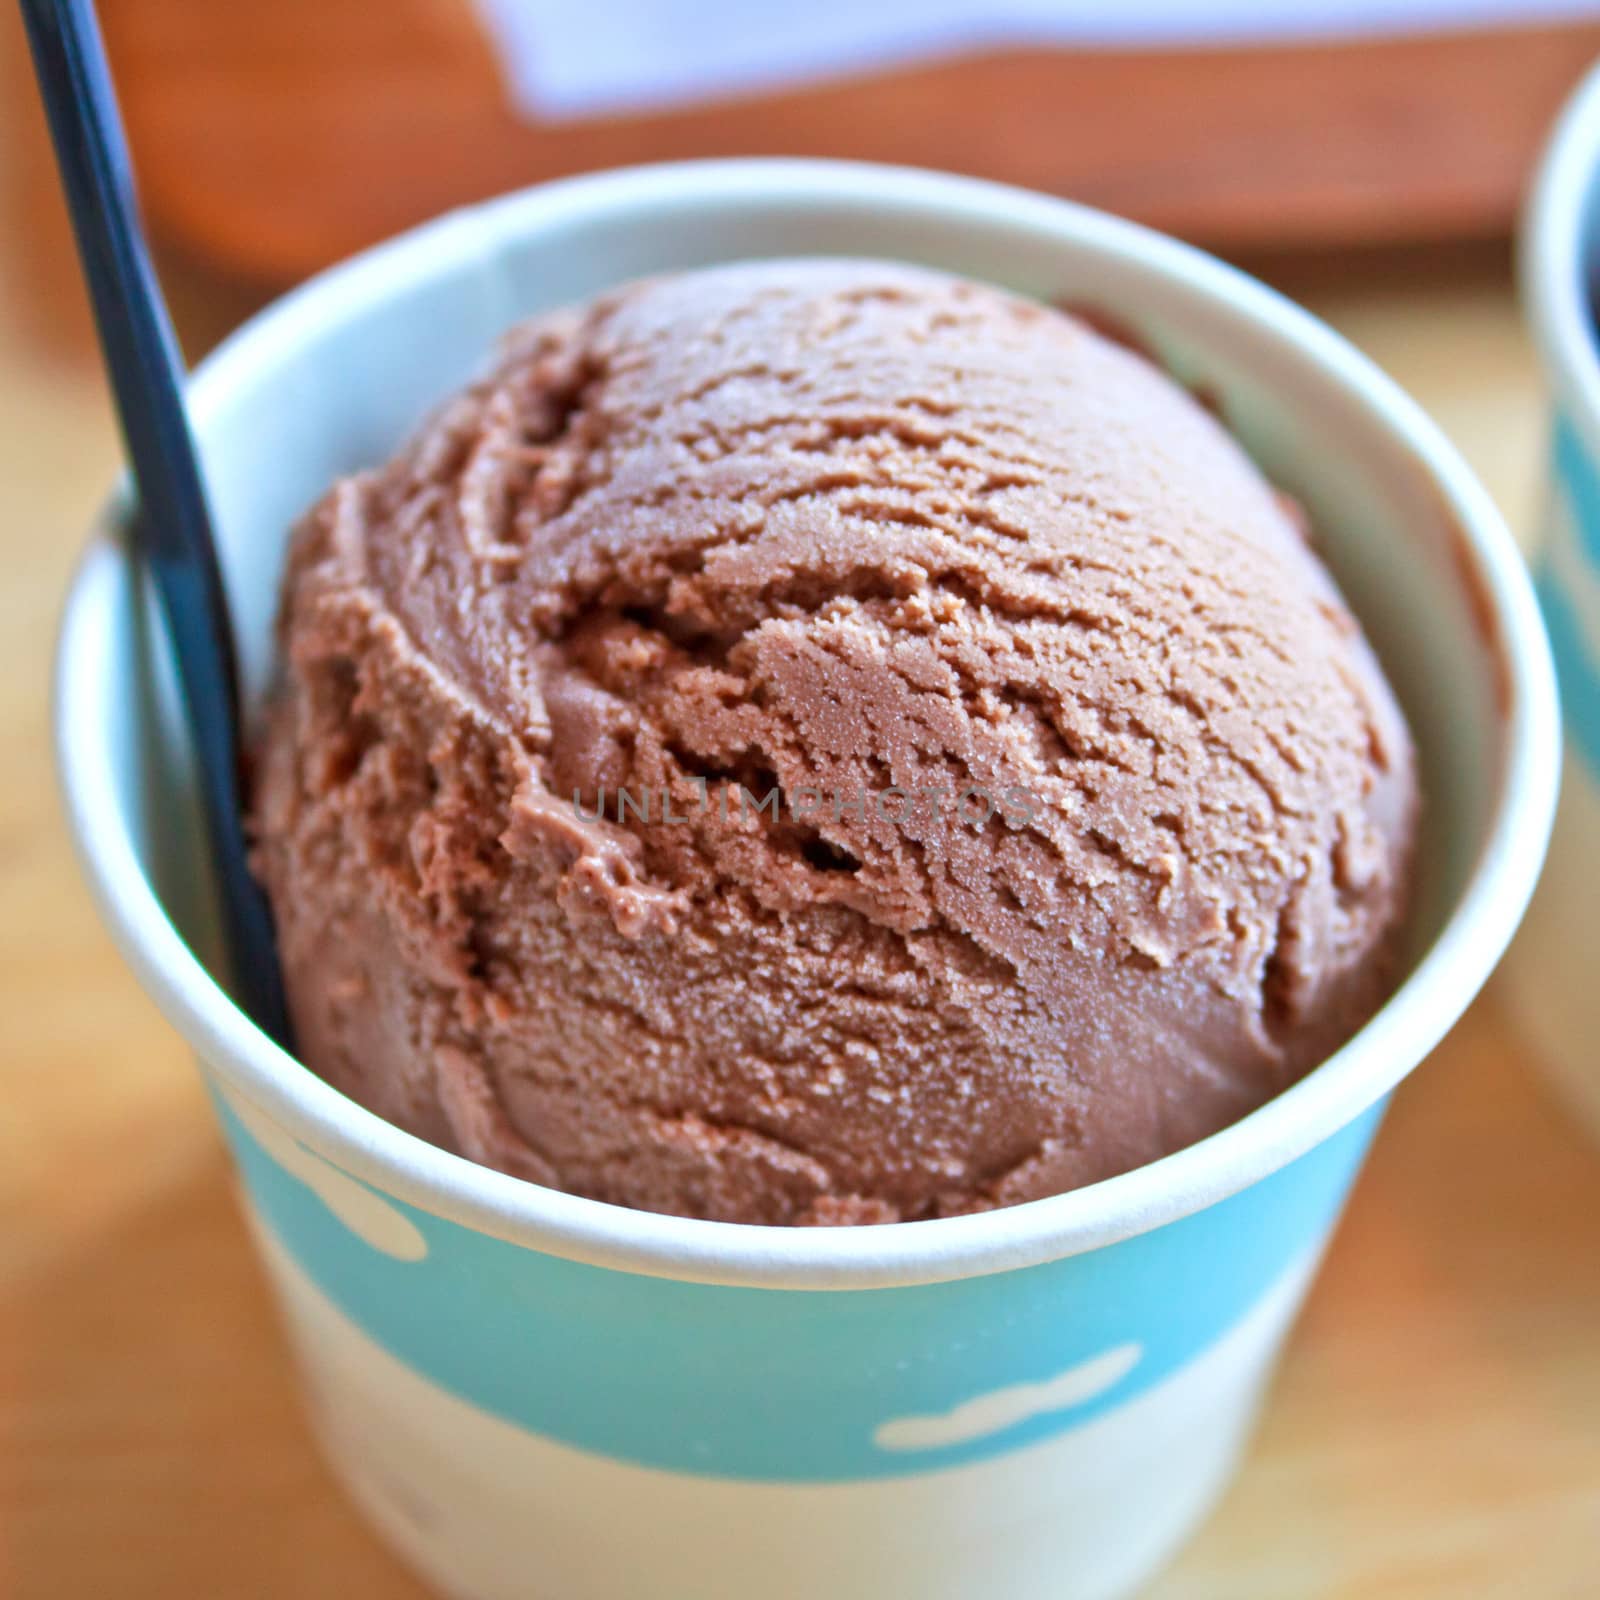 Chocolate ice cream scoop 2 by redthirteen